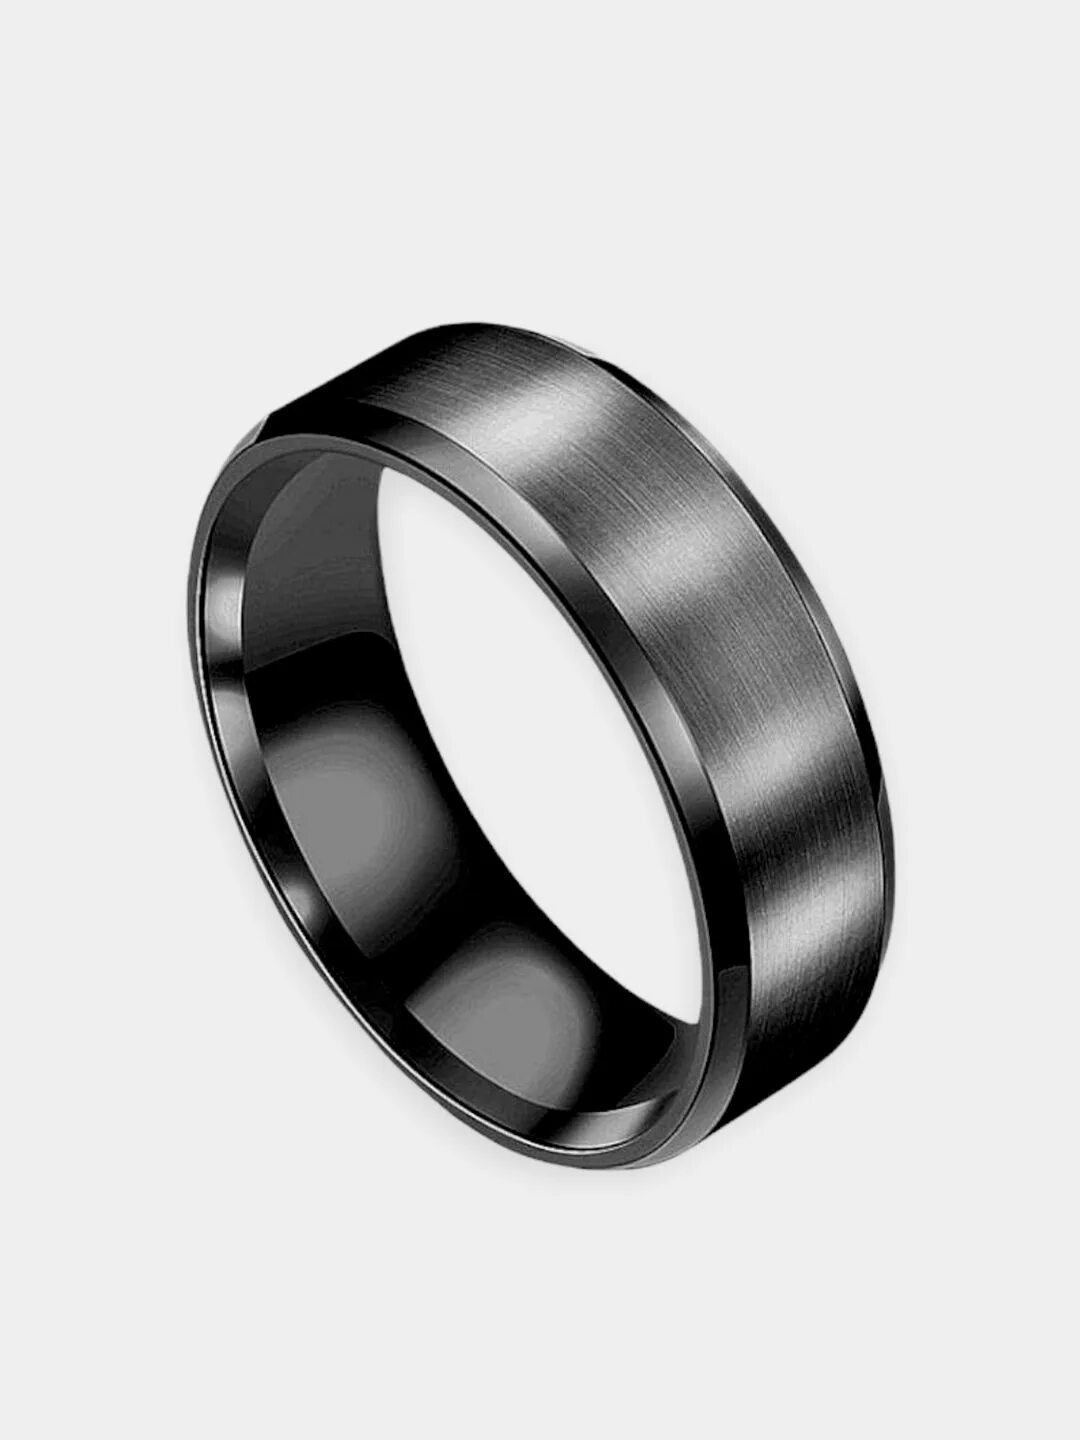 Stainless Steel кольцо мужское. Кольцо нержавеющая сталь 8мм. Tokyo Revengers кольцо. Титановые кольца. Стальные кольца купить